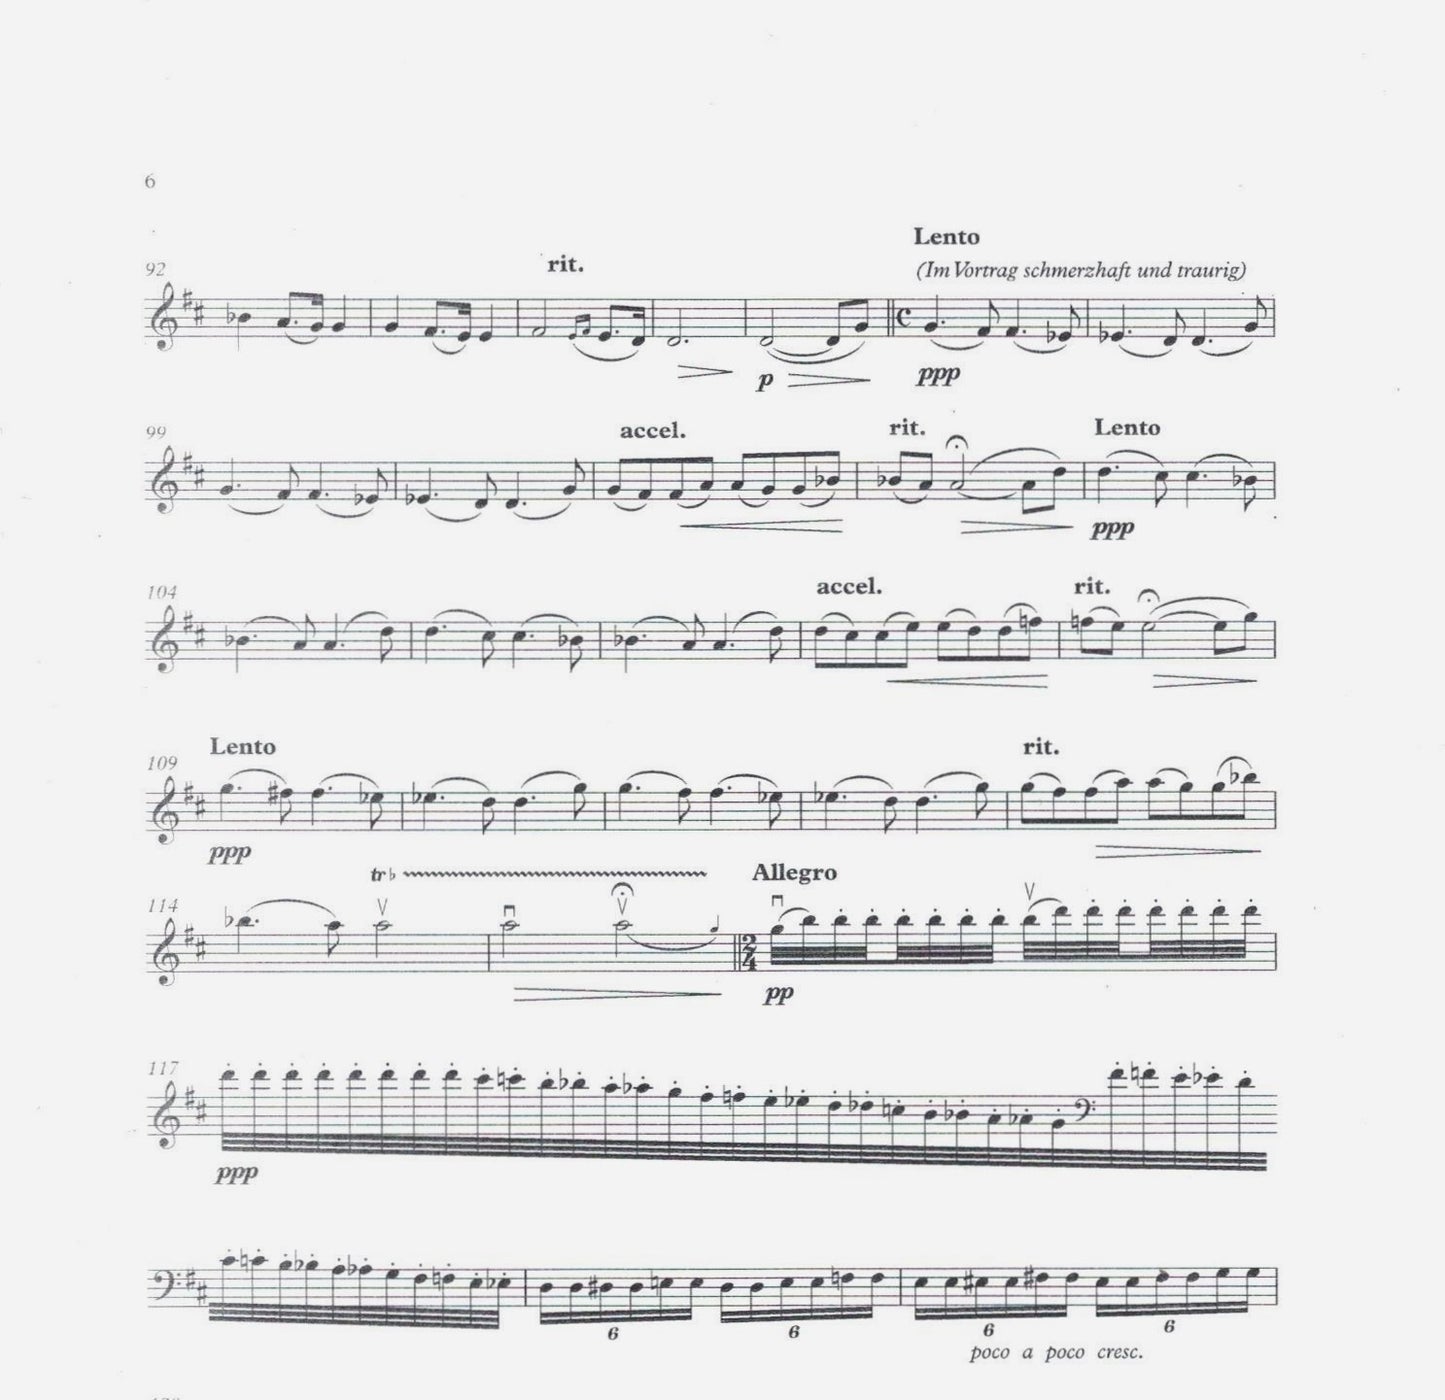 Gustav Láska: Konzertstück Op.54 for unaccompanied double bass